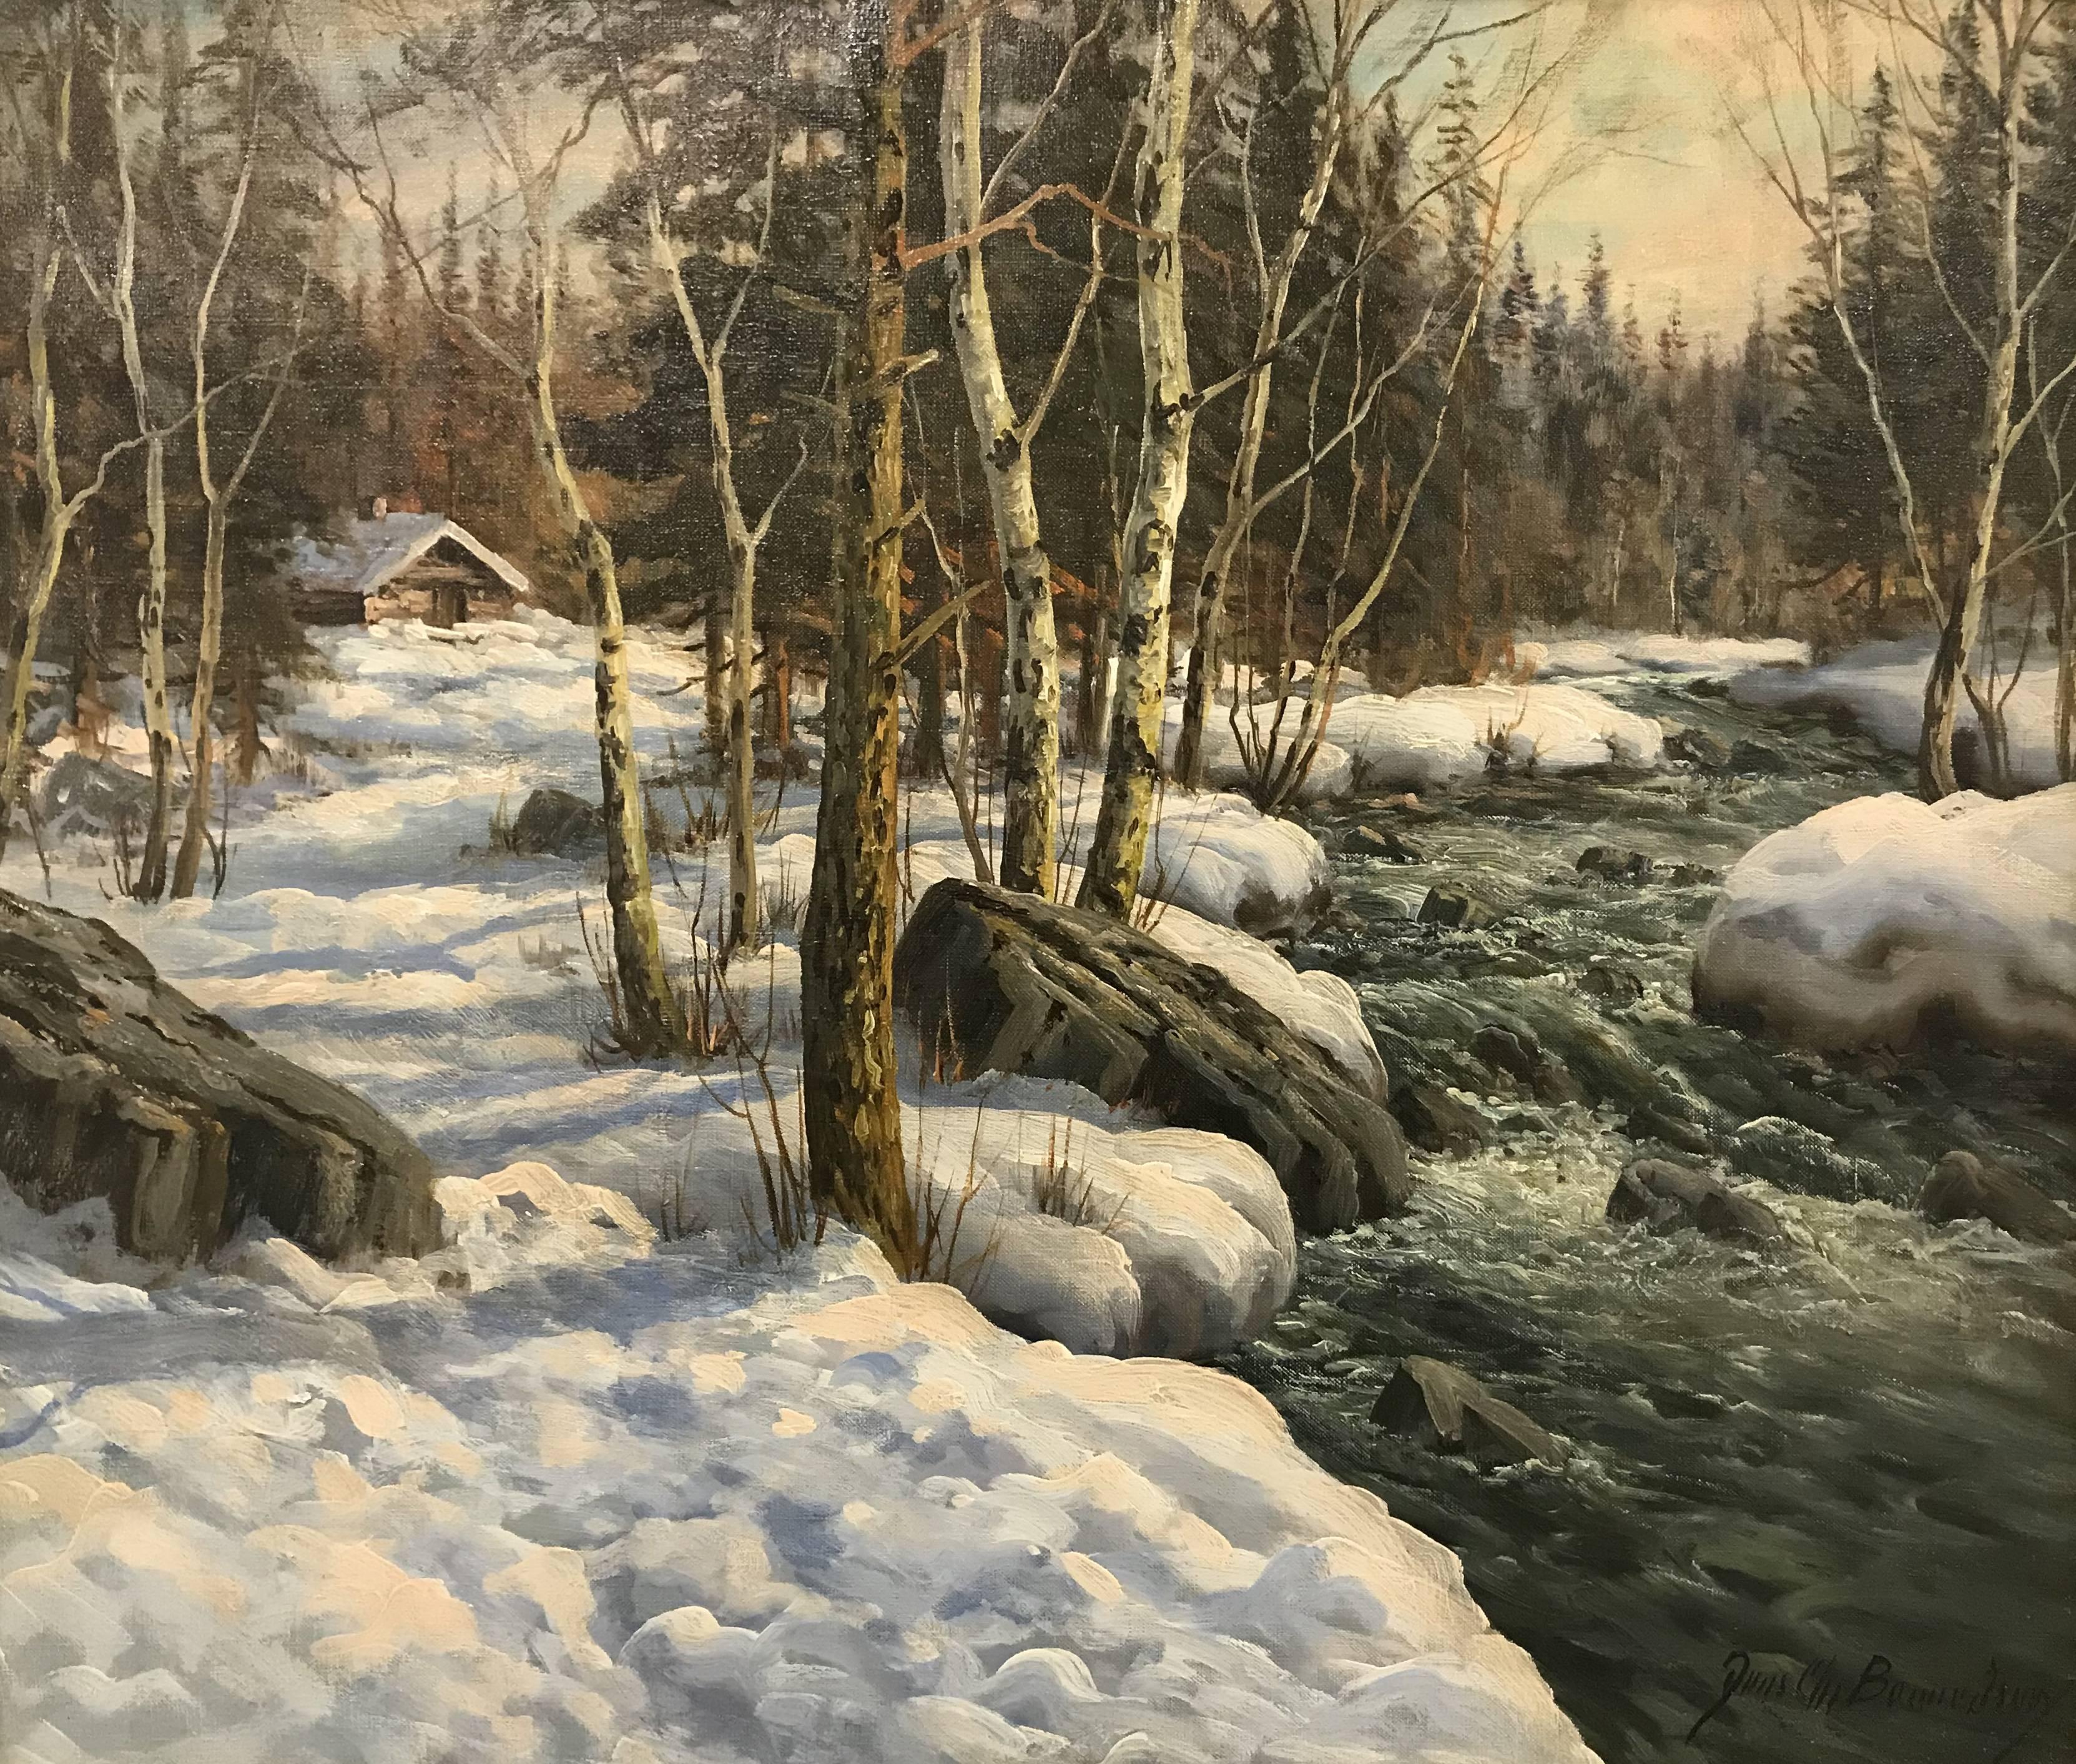 Jens Christian Bennedsen Landscape Painting - Original Painting - 'Stream in Winter Forest’ by Danish Landscape Artist